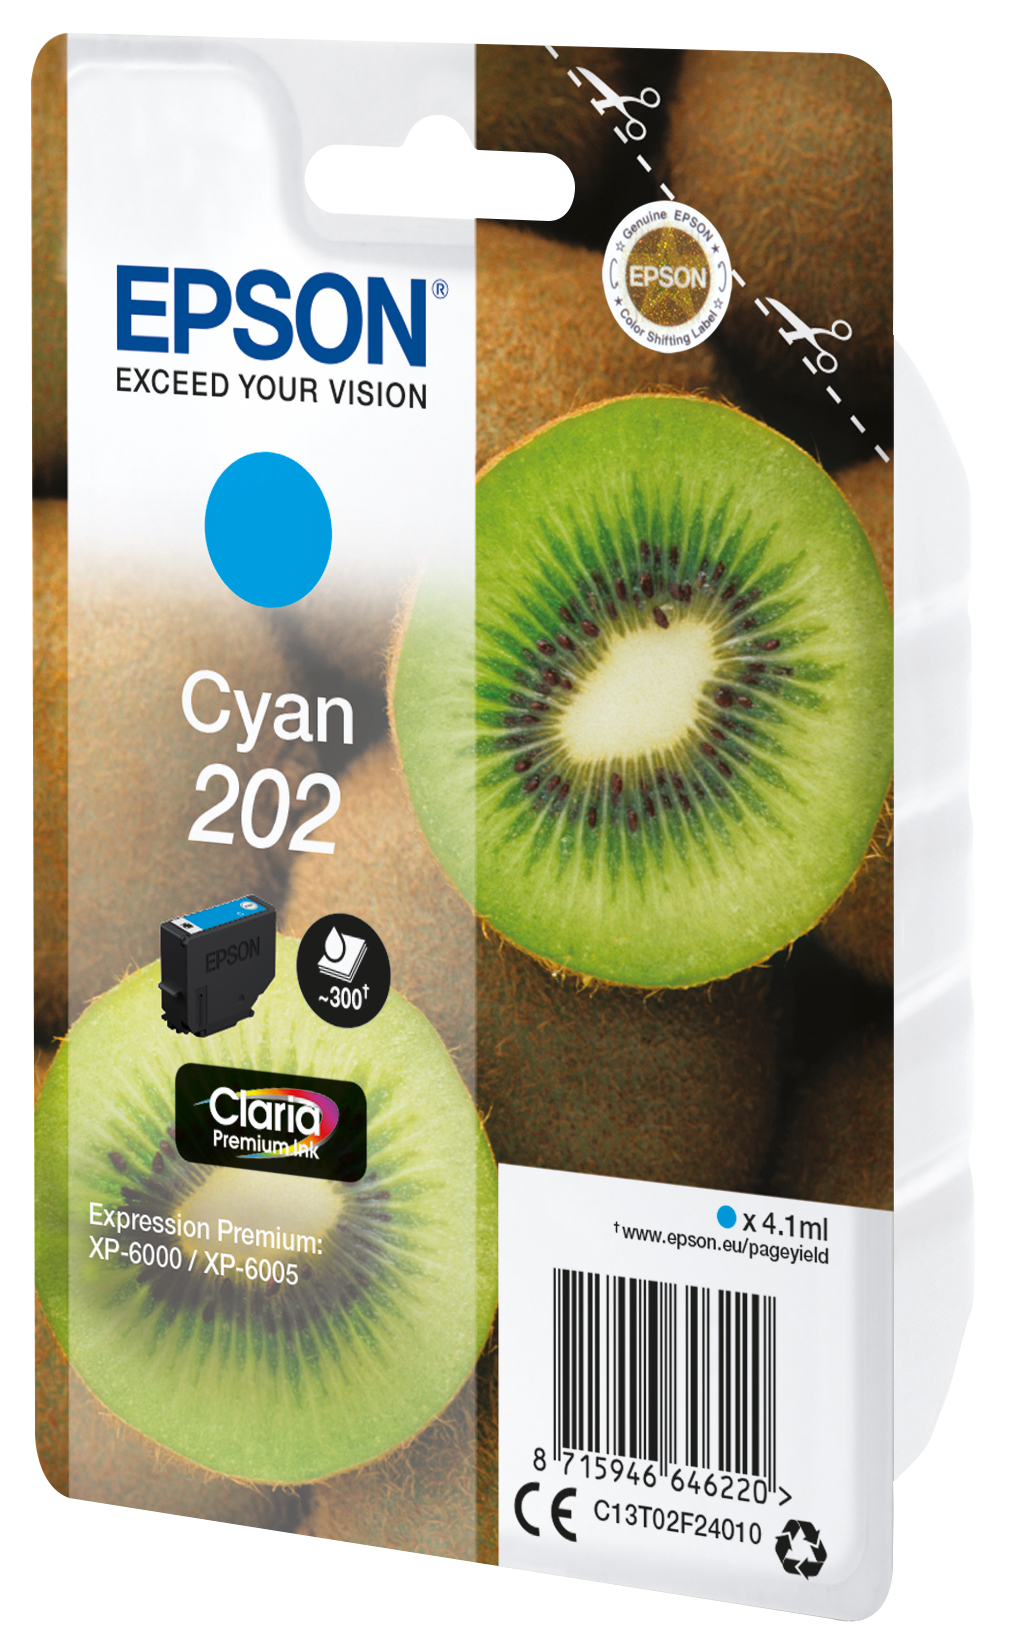 Epson Kiwi Singlepack Cyan 202 Claria Premium Ink - Standardertrag - 4,1 ml - 300 Seiten - 1 Stück(e)